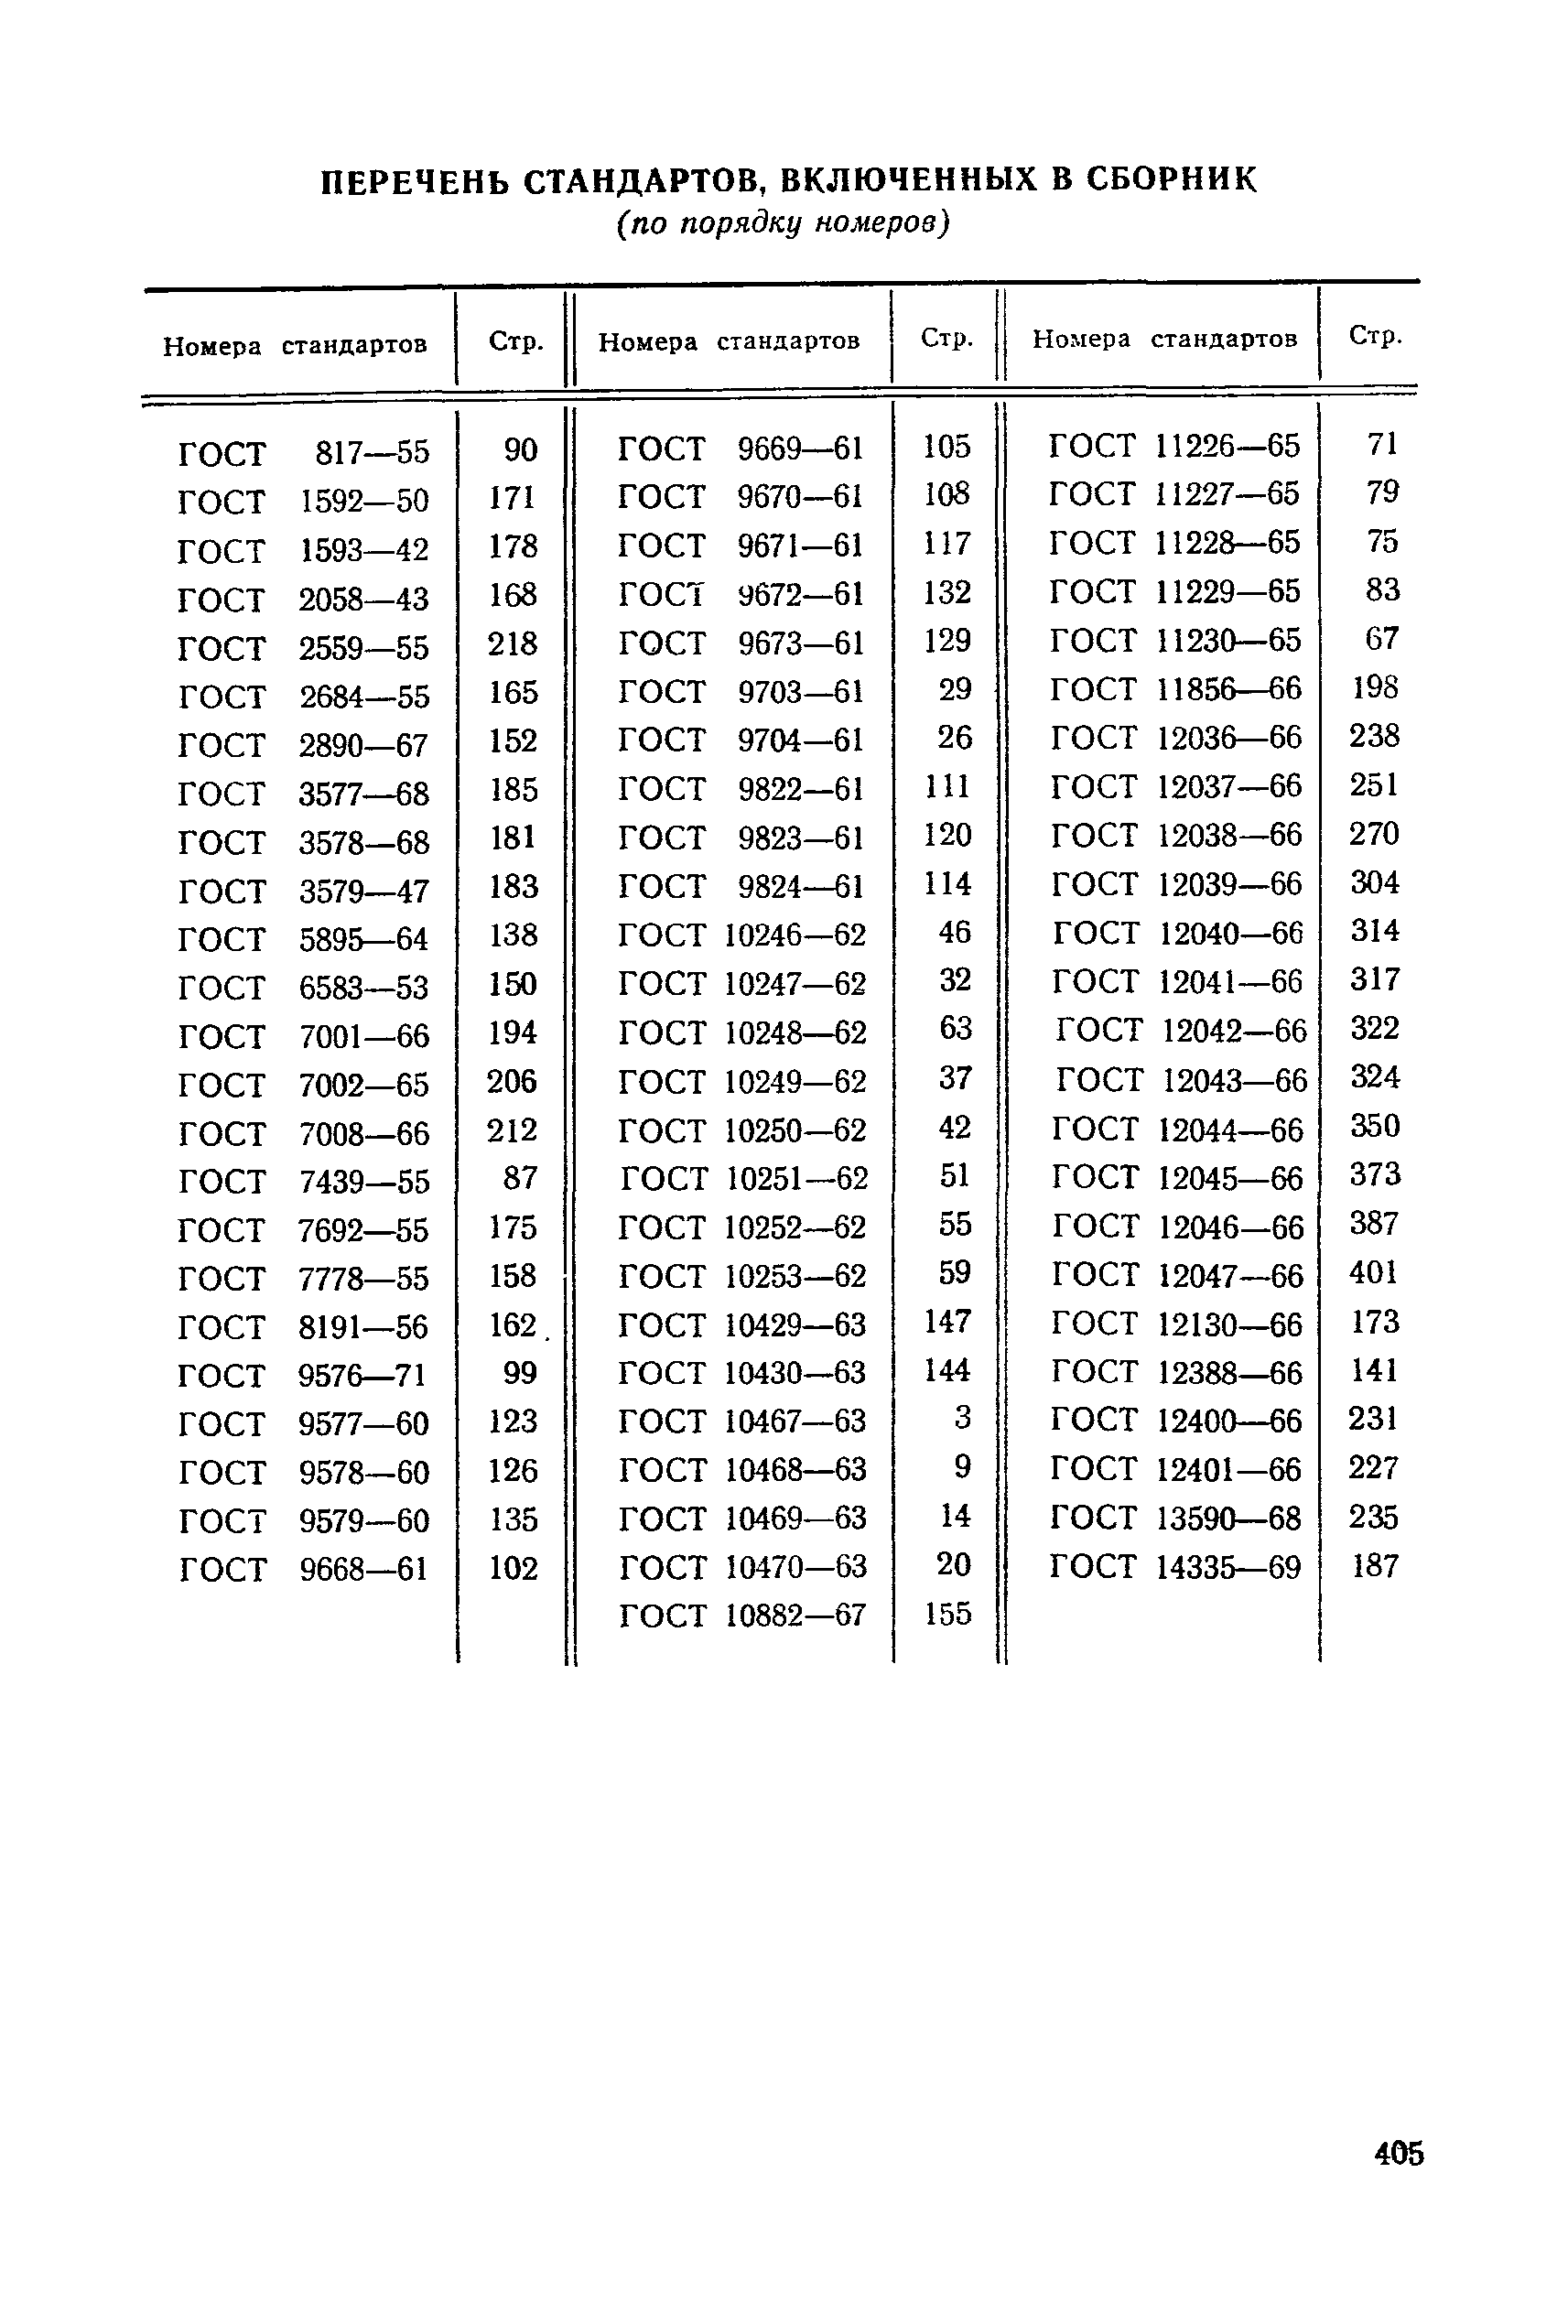 ГОСТ 817-55